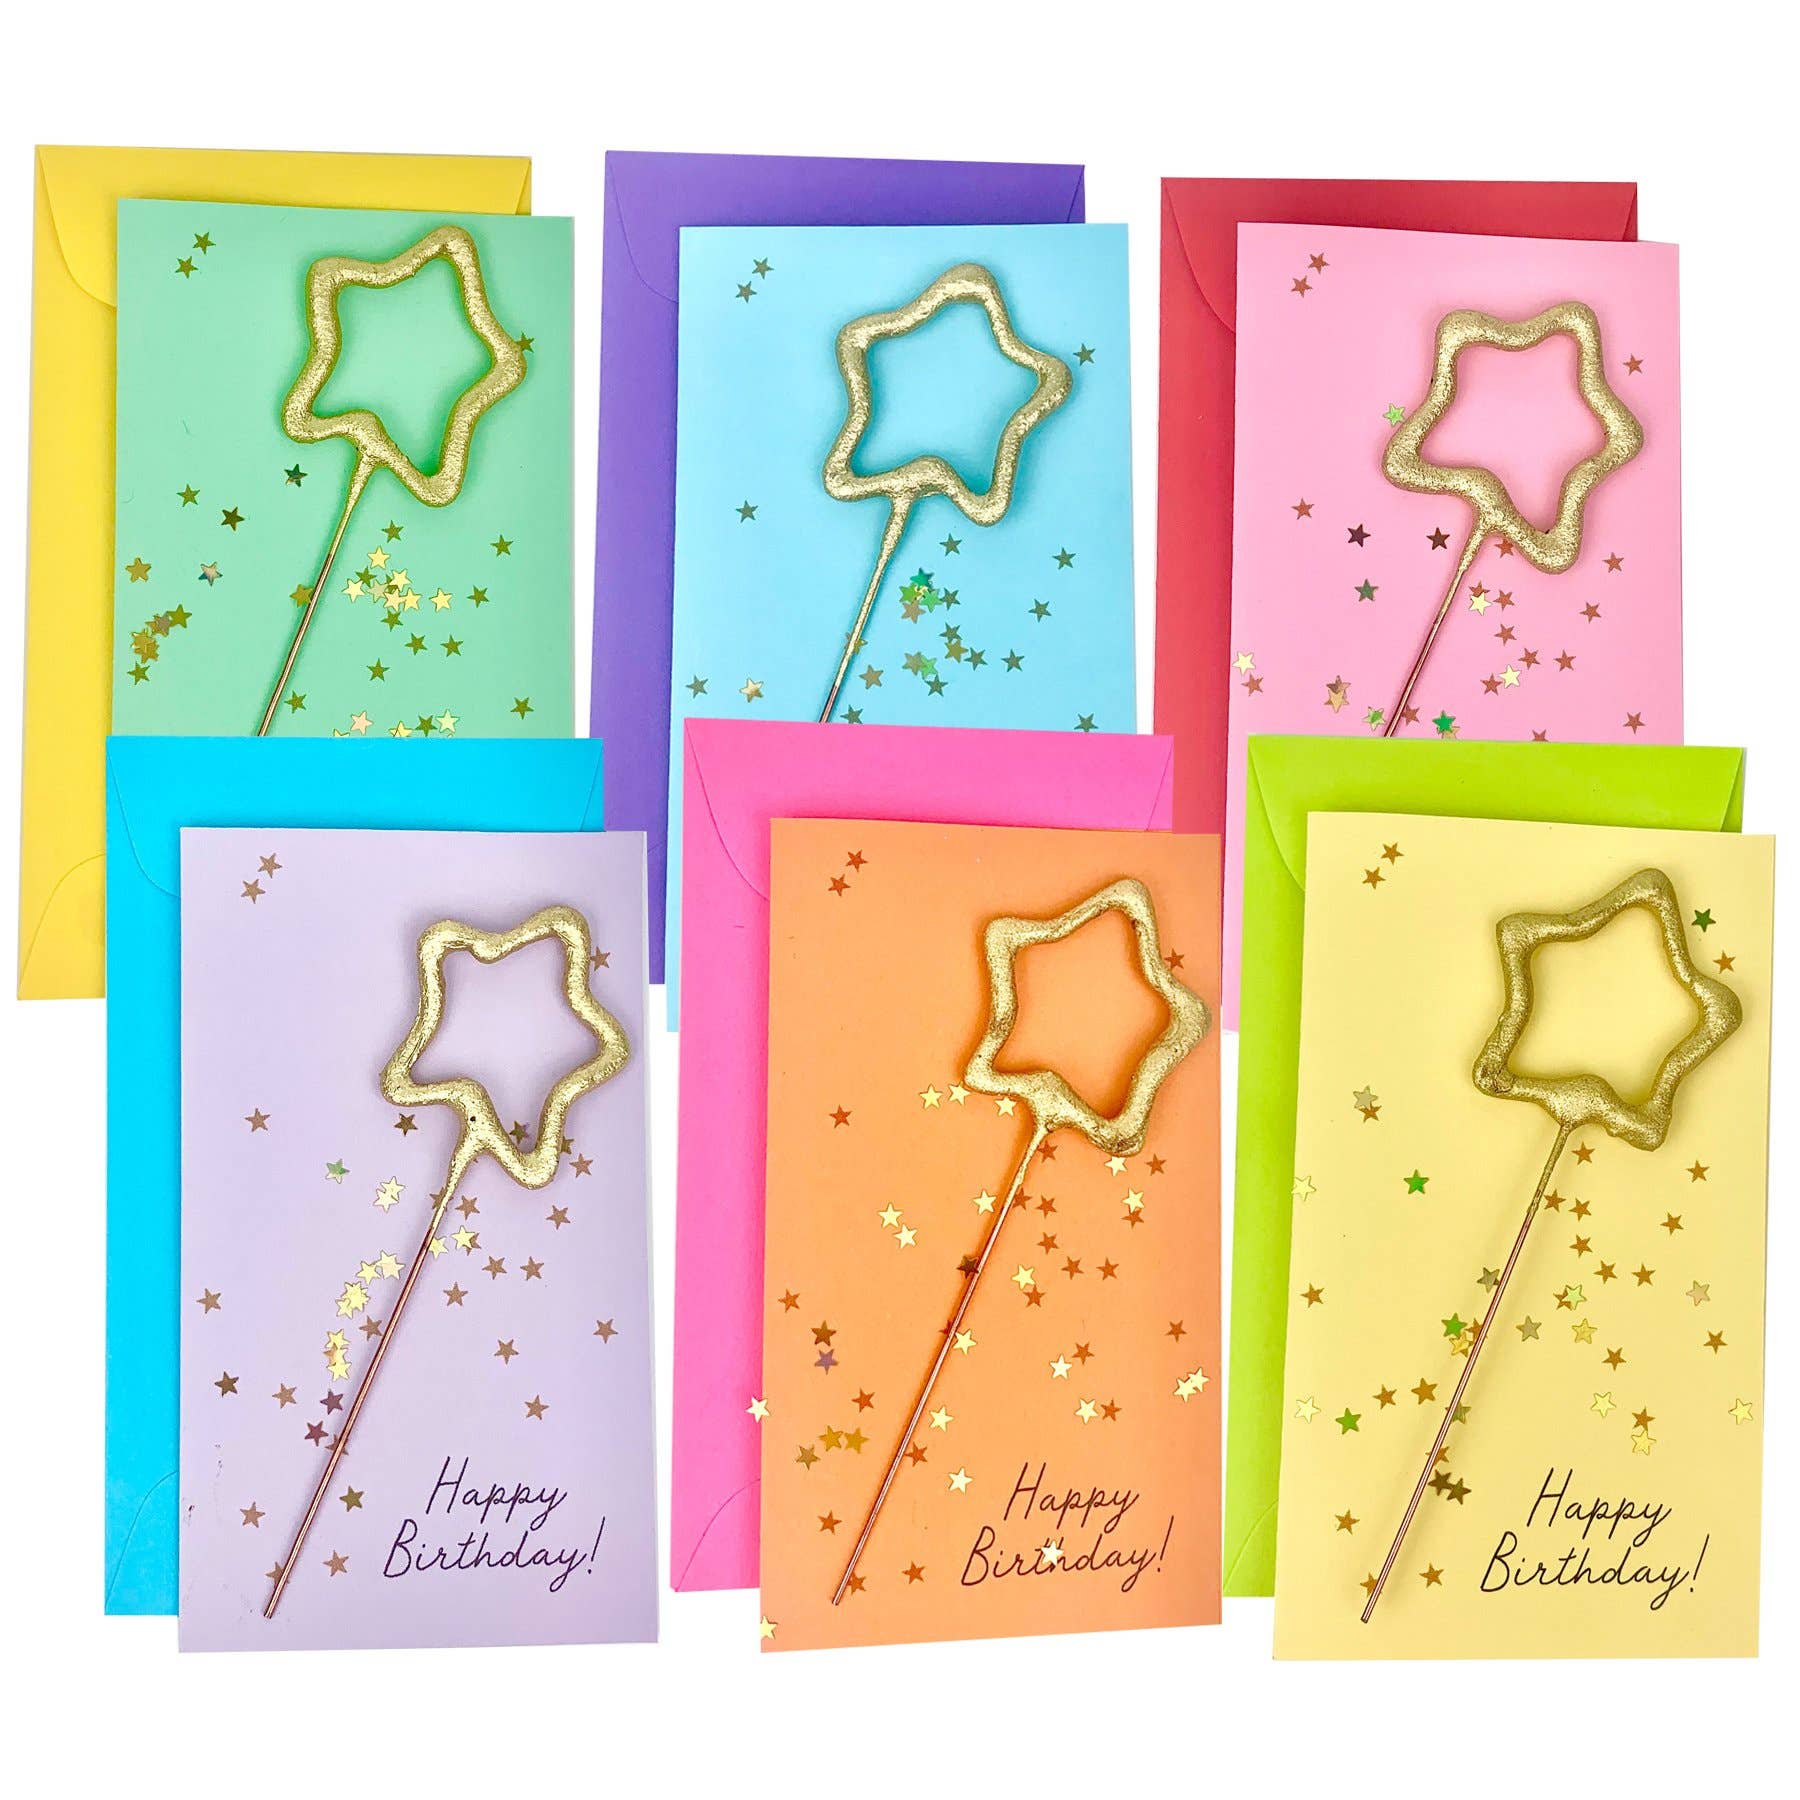 Confetti Sparkler Cards - Happy Birthday!